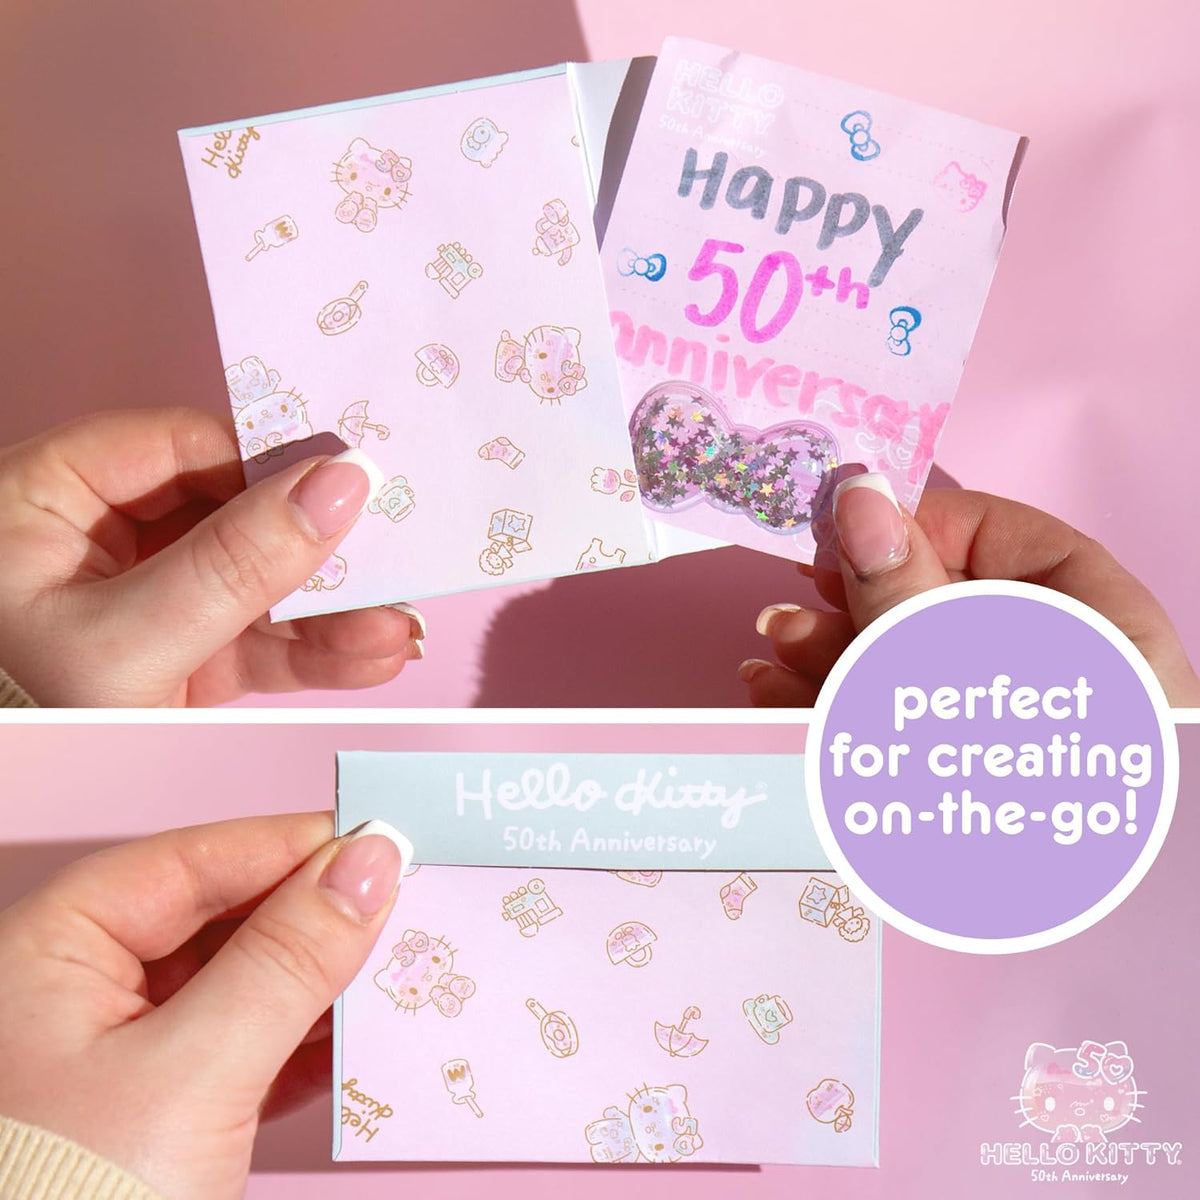 Hello Kitty x STMT 50th Anniversary Mini Collectible Stationery Set Stationery HORIZON   